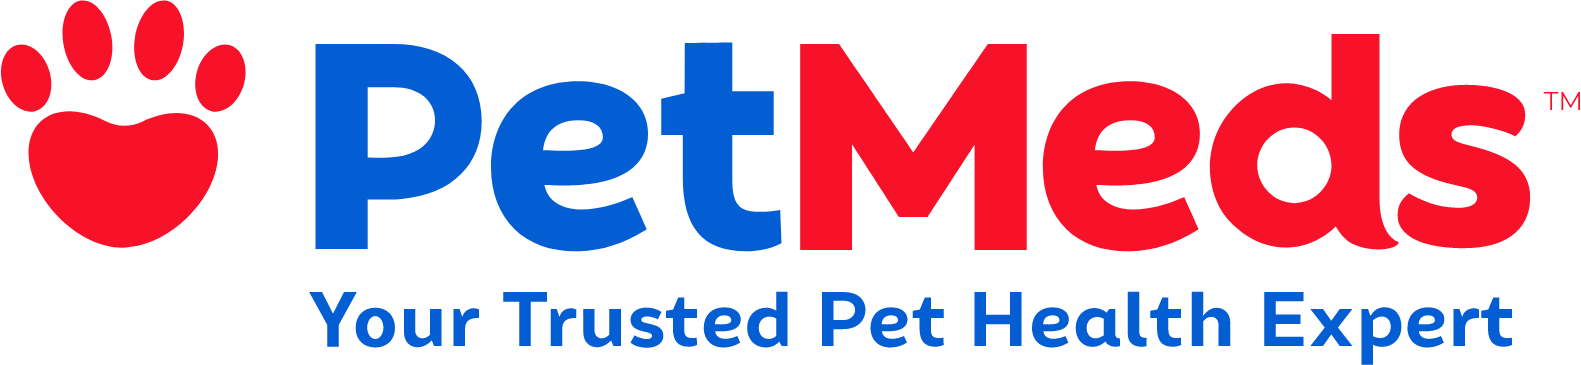 1-800-PetMeds
 logo large (transparent PNG)